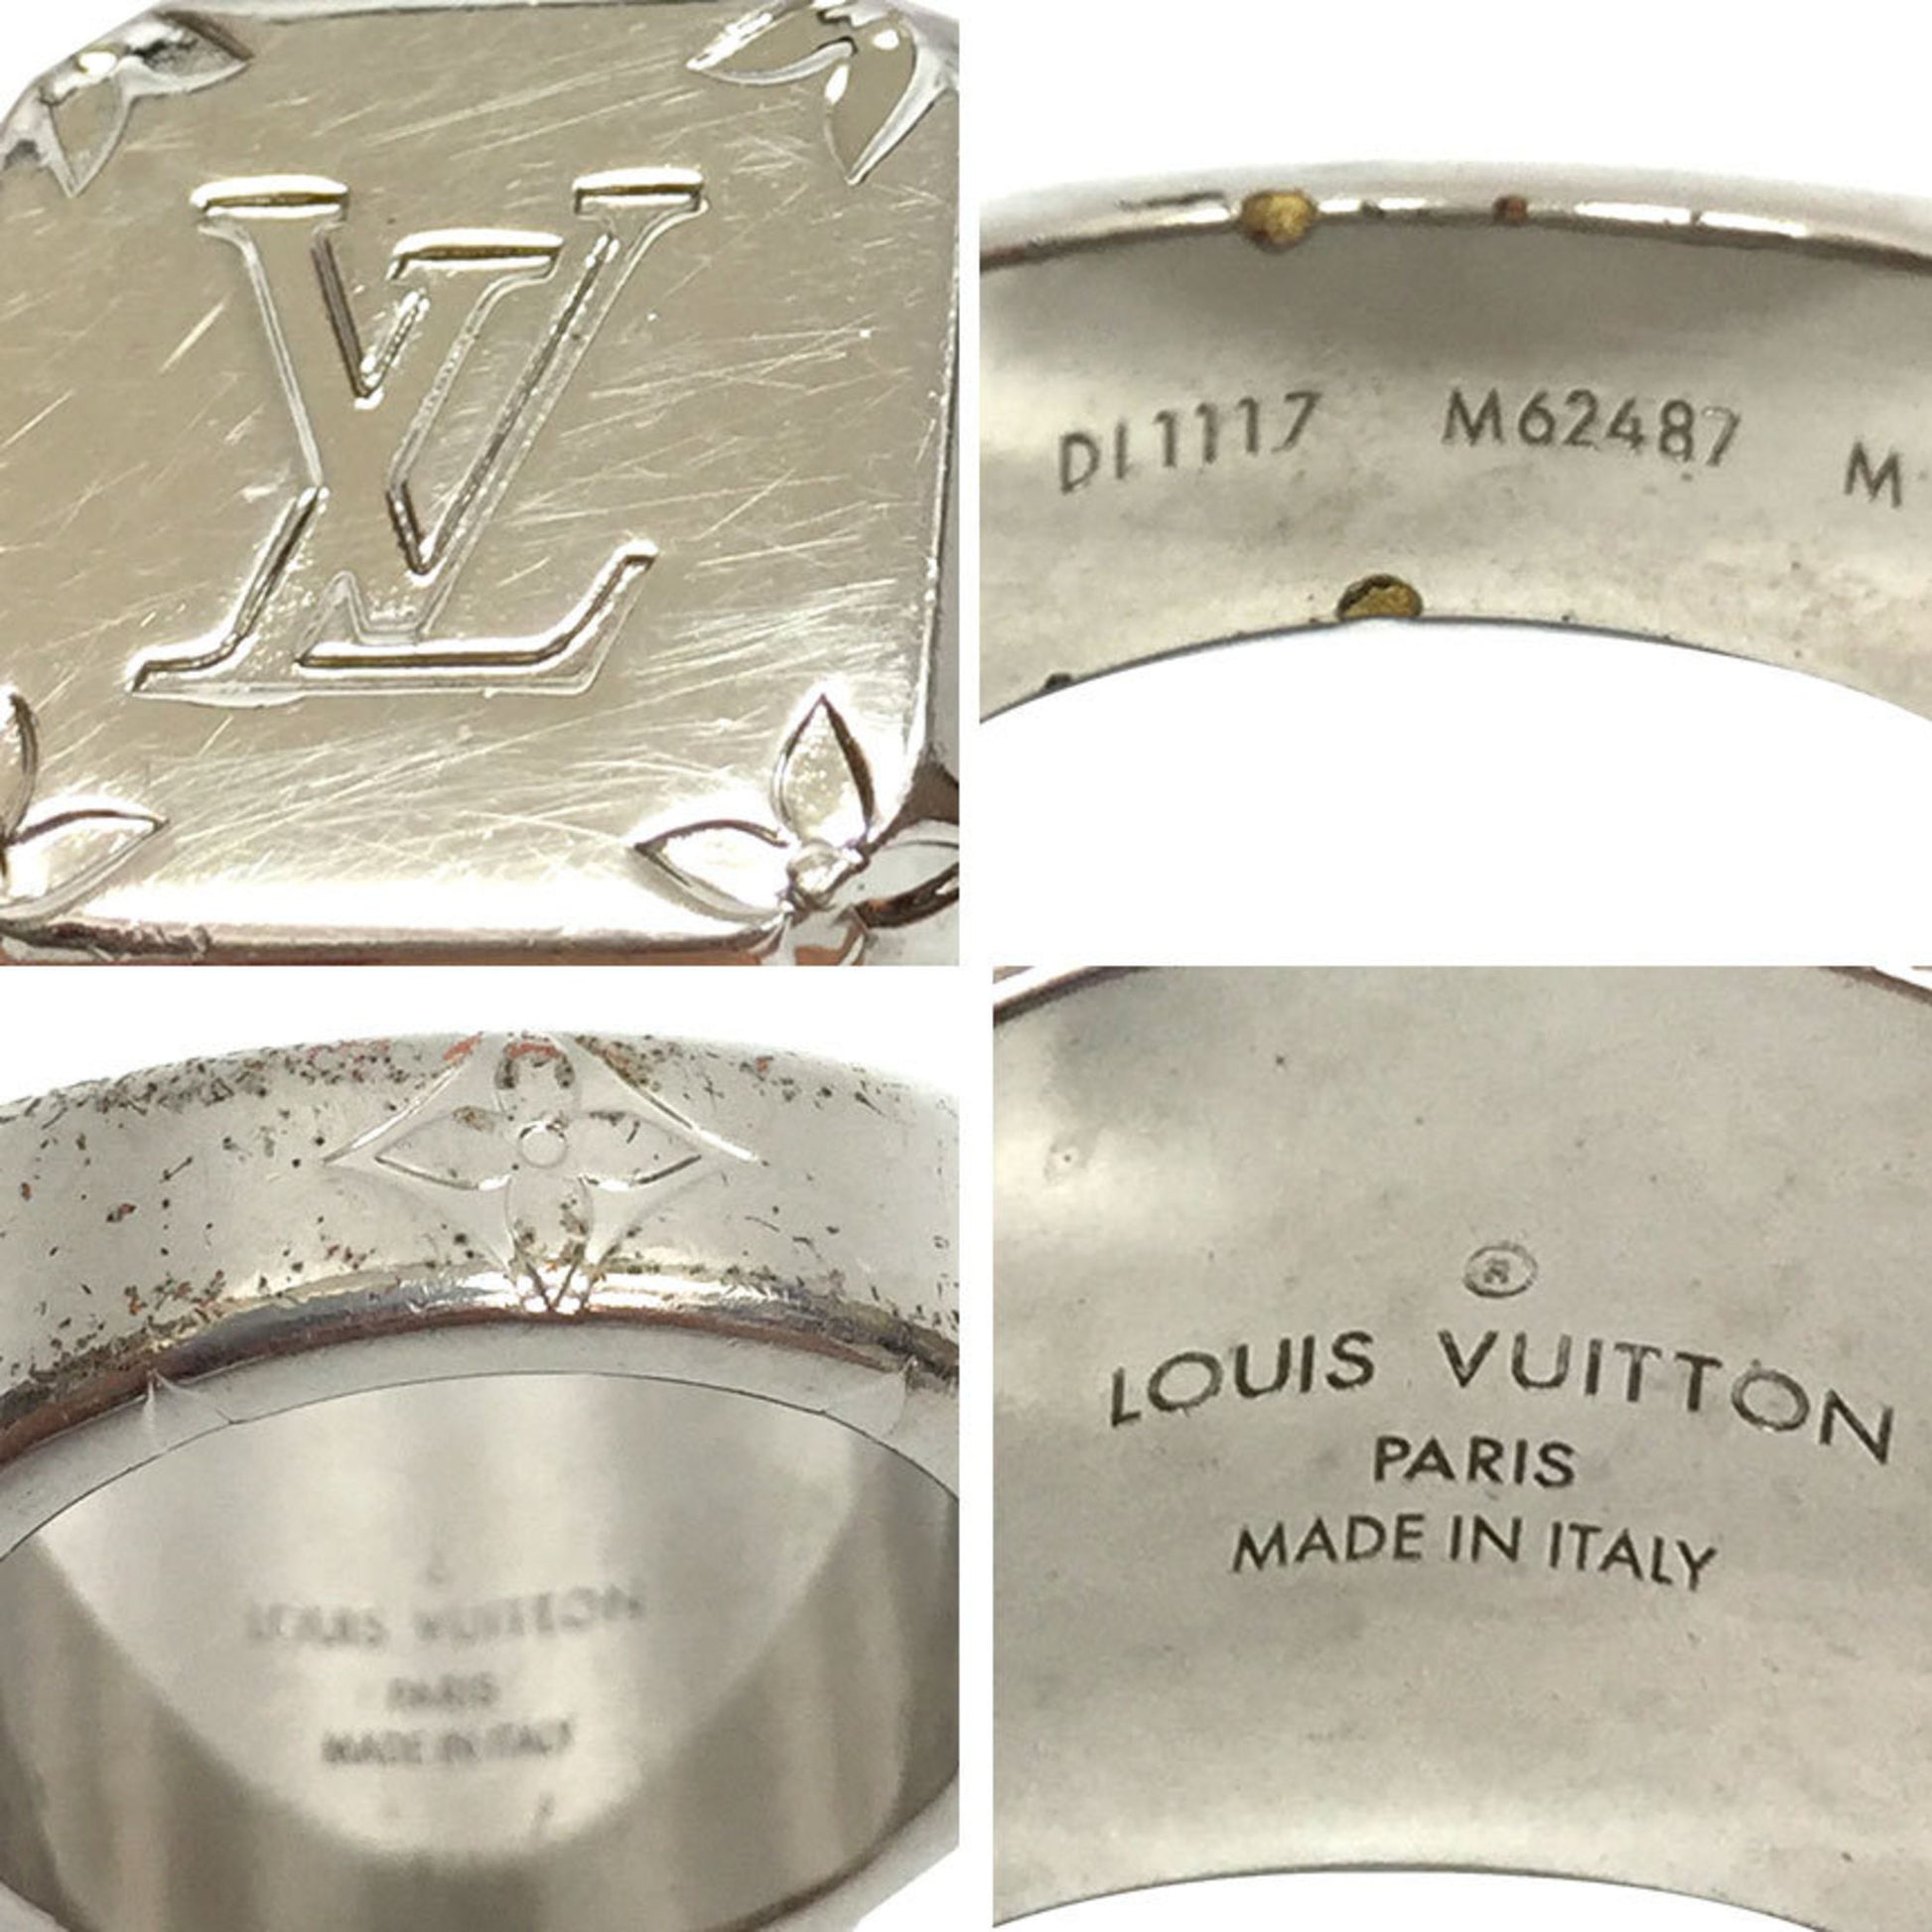 Shop Louis Vuitton Monogram signet ring (M62488, M62487) by JOY＋